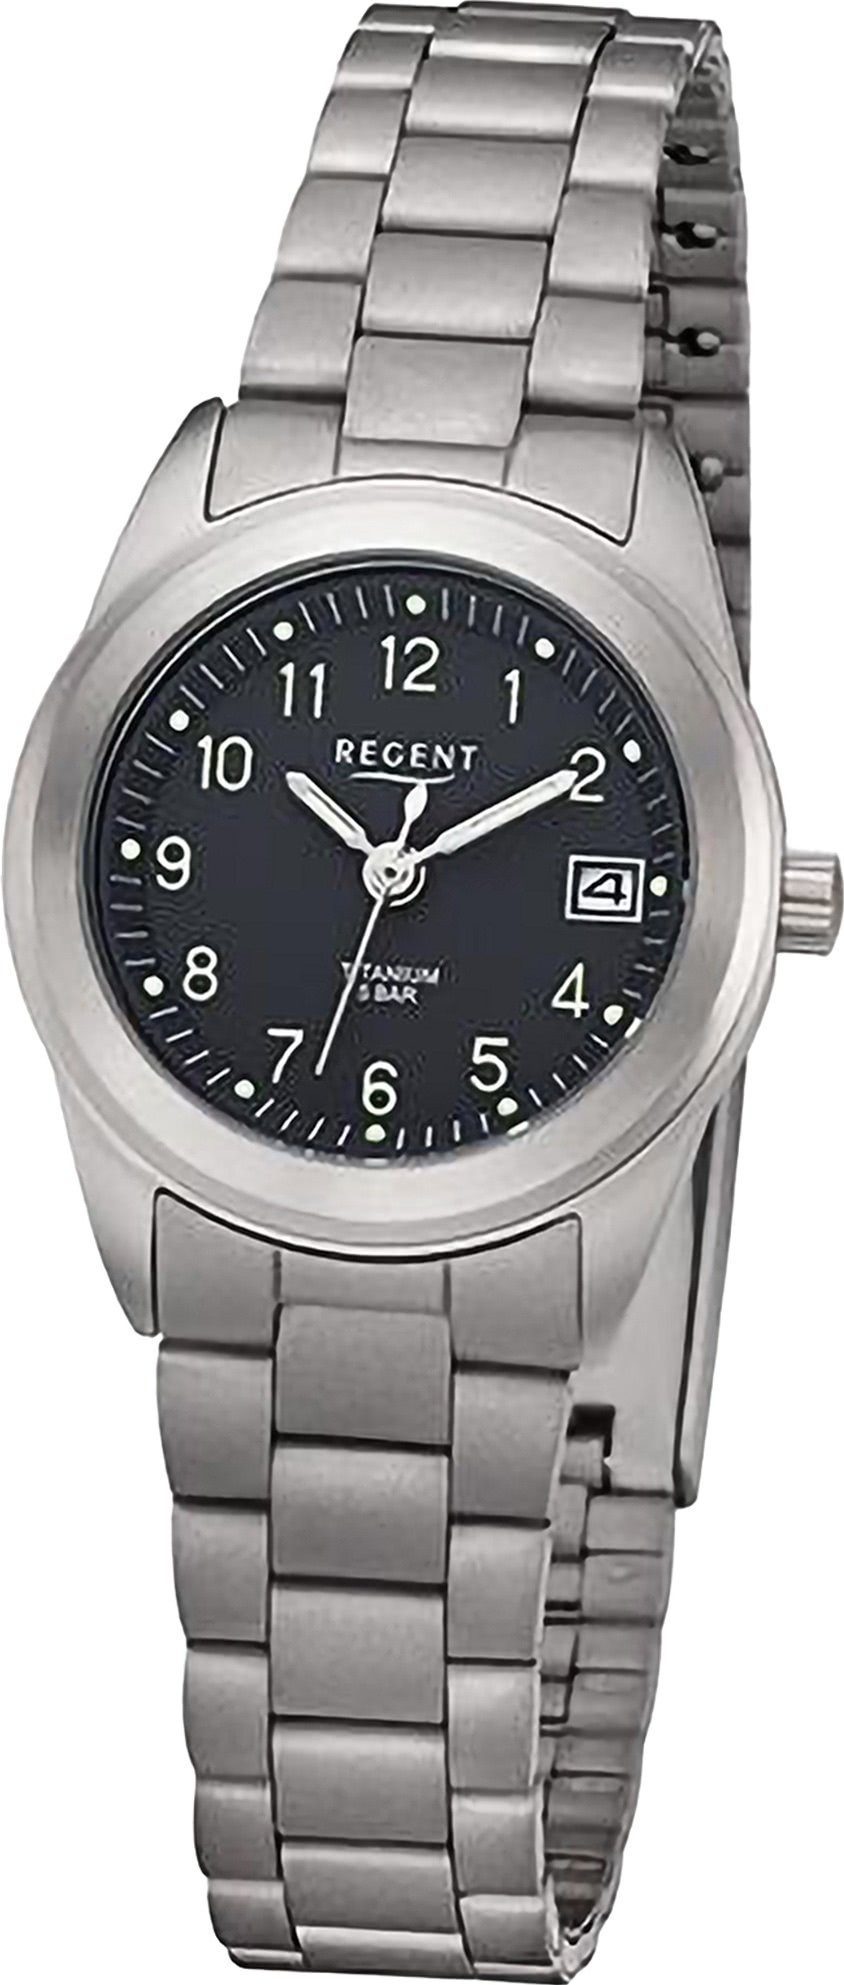 Regent Quarzuhr Regent Damen Armbanduhr (ca. Analog, 26mm), Armbanduhr Damen Metallarmband rund, extra groß